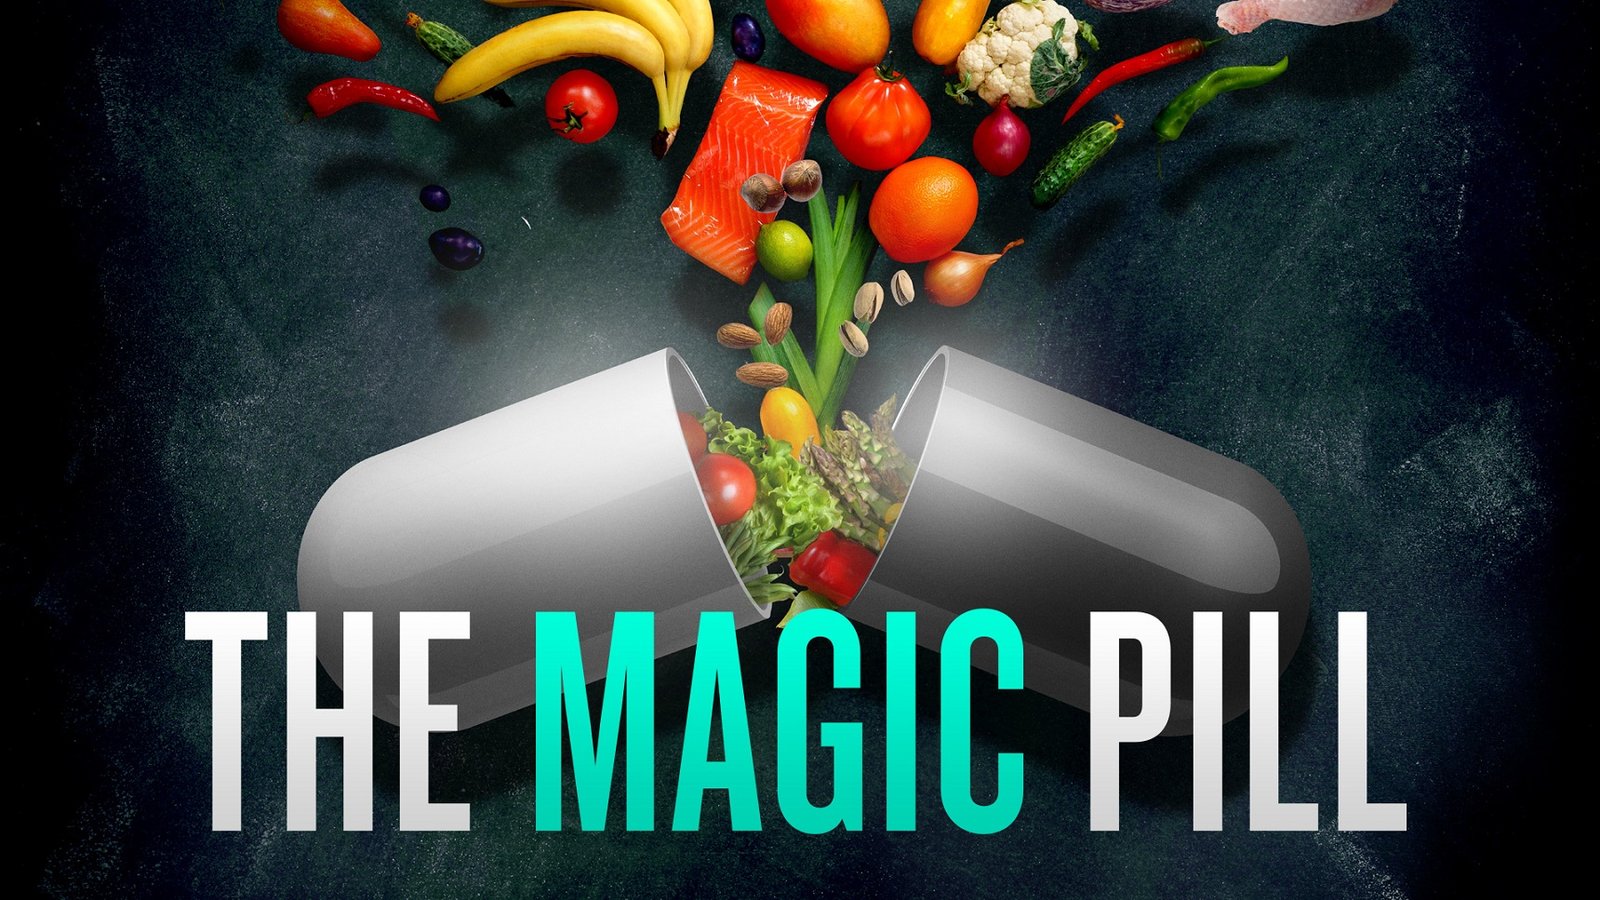 The Magic Pill - Combating Illness Through Diet Change